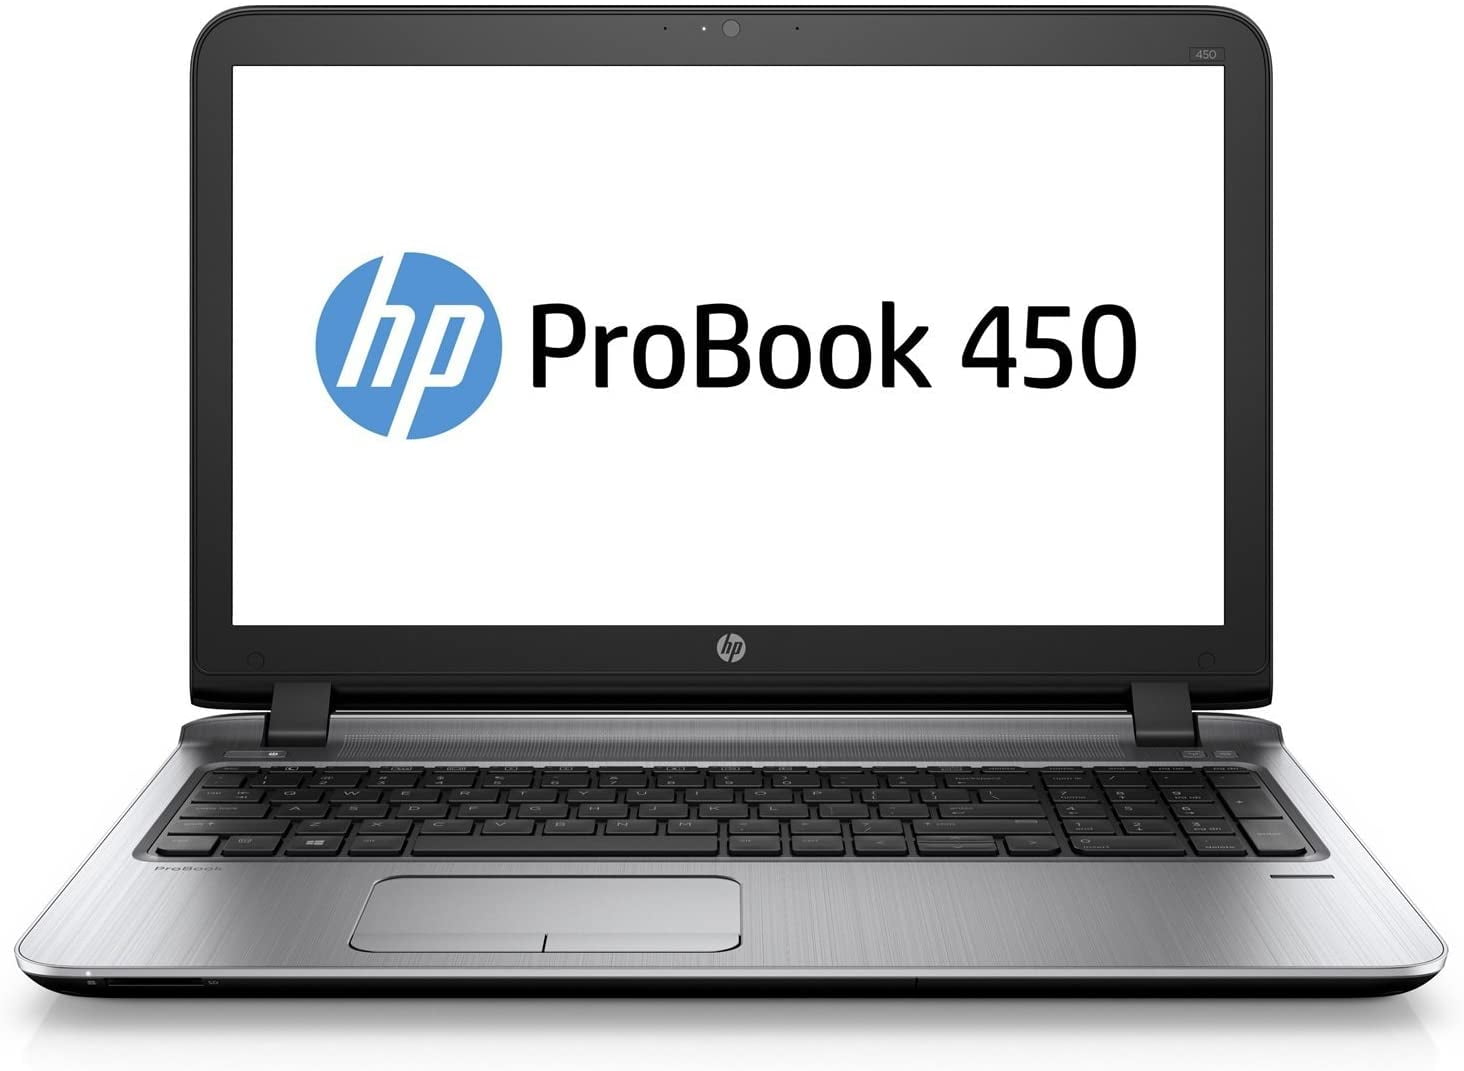 HP ProBook 450 G1 15.6" Laptop Notebook, Windows 10 Home Professional Intel Dual-Core i5 2.50 GHz 4GB Ram 500GB HDD Webcam HDMI USB 3.0 - Refurbished Laptop PC